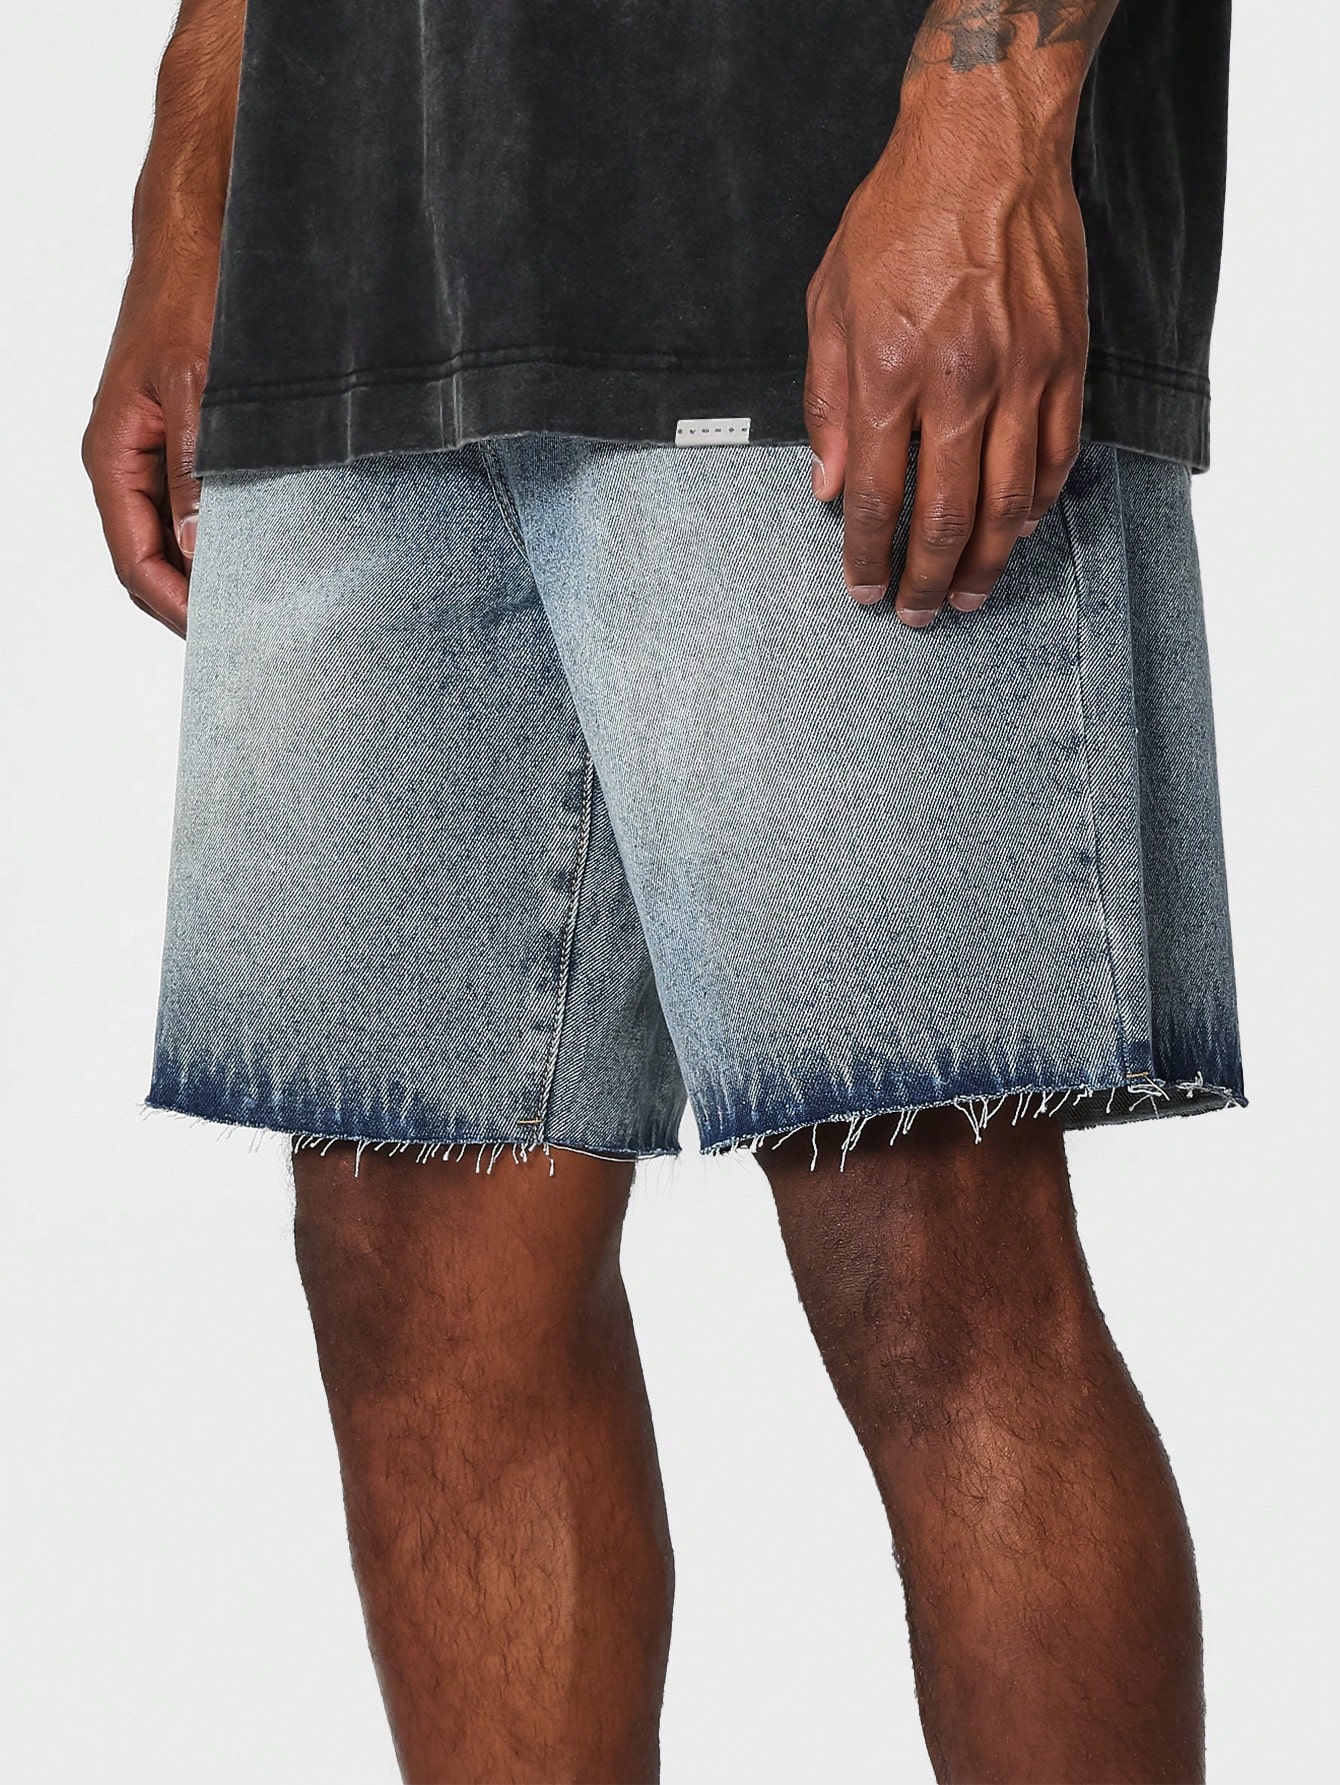 2021 summer hot shorts women jeans high waist denim shorts fringe frayed ripped denim shorts for women hot shorts with pockets SUMWON Джинсовые шорты с необработанными краями, синий